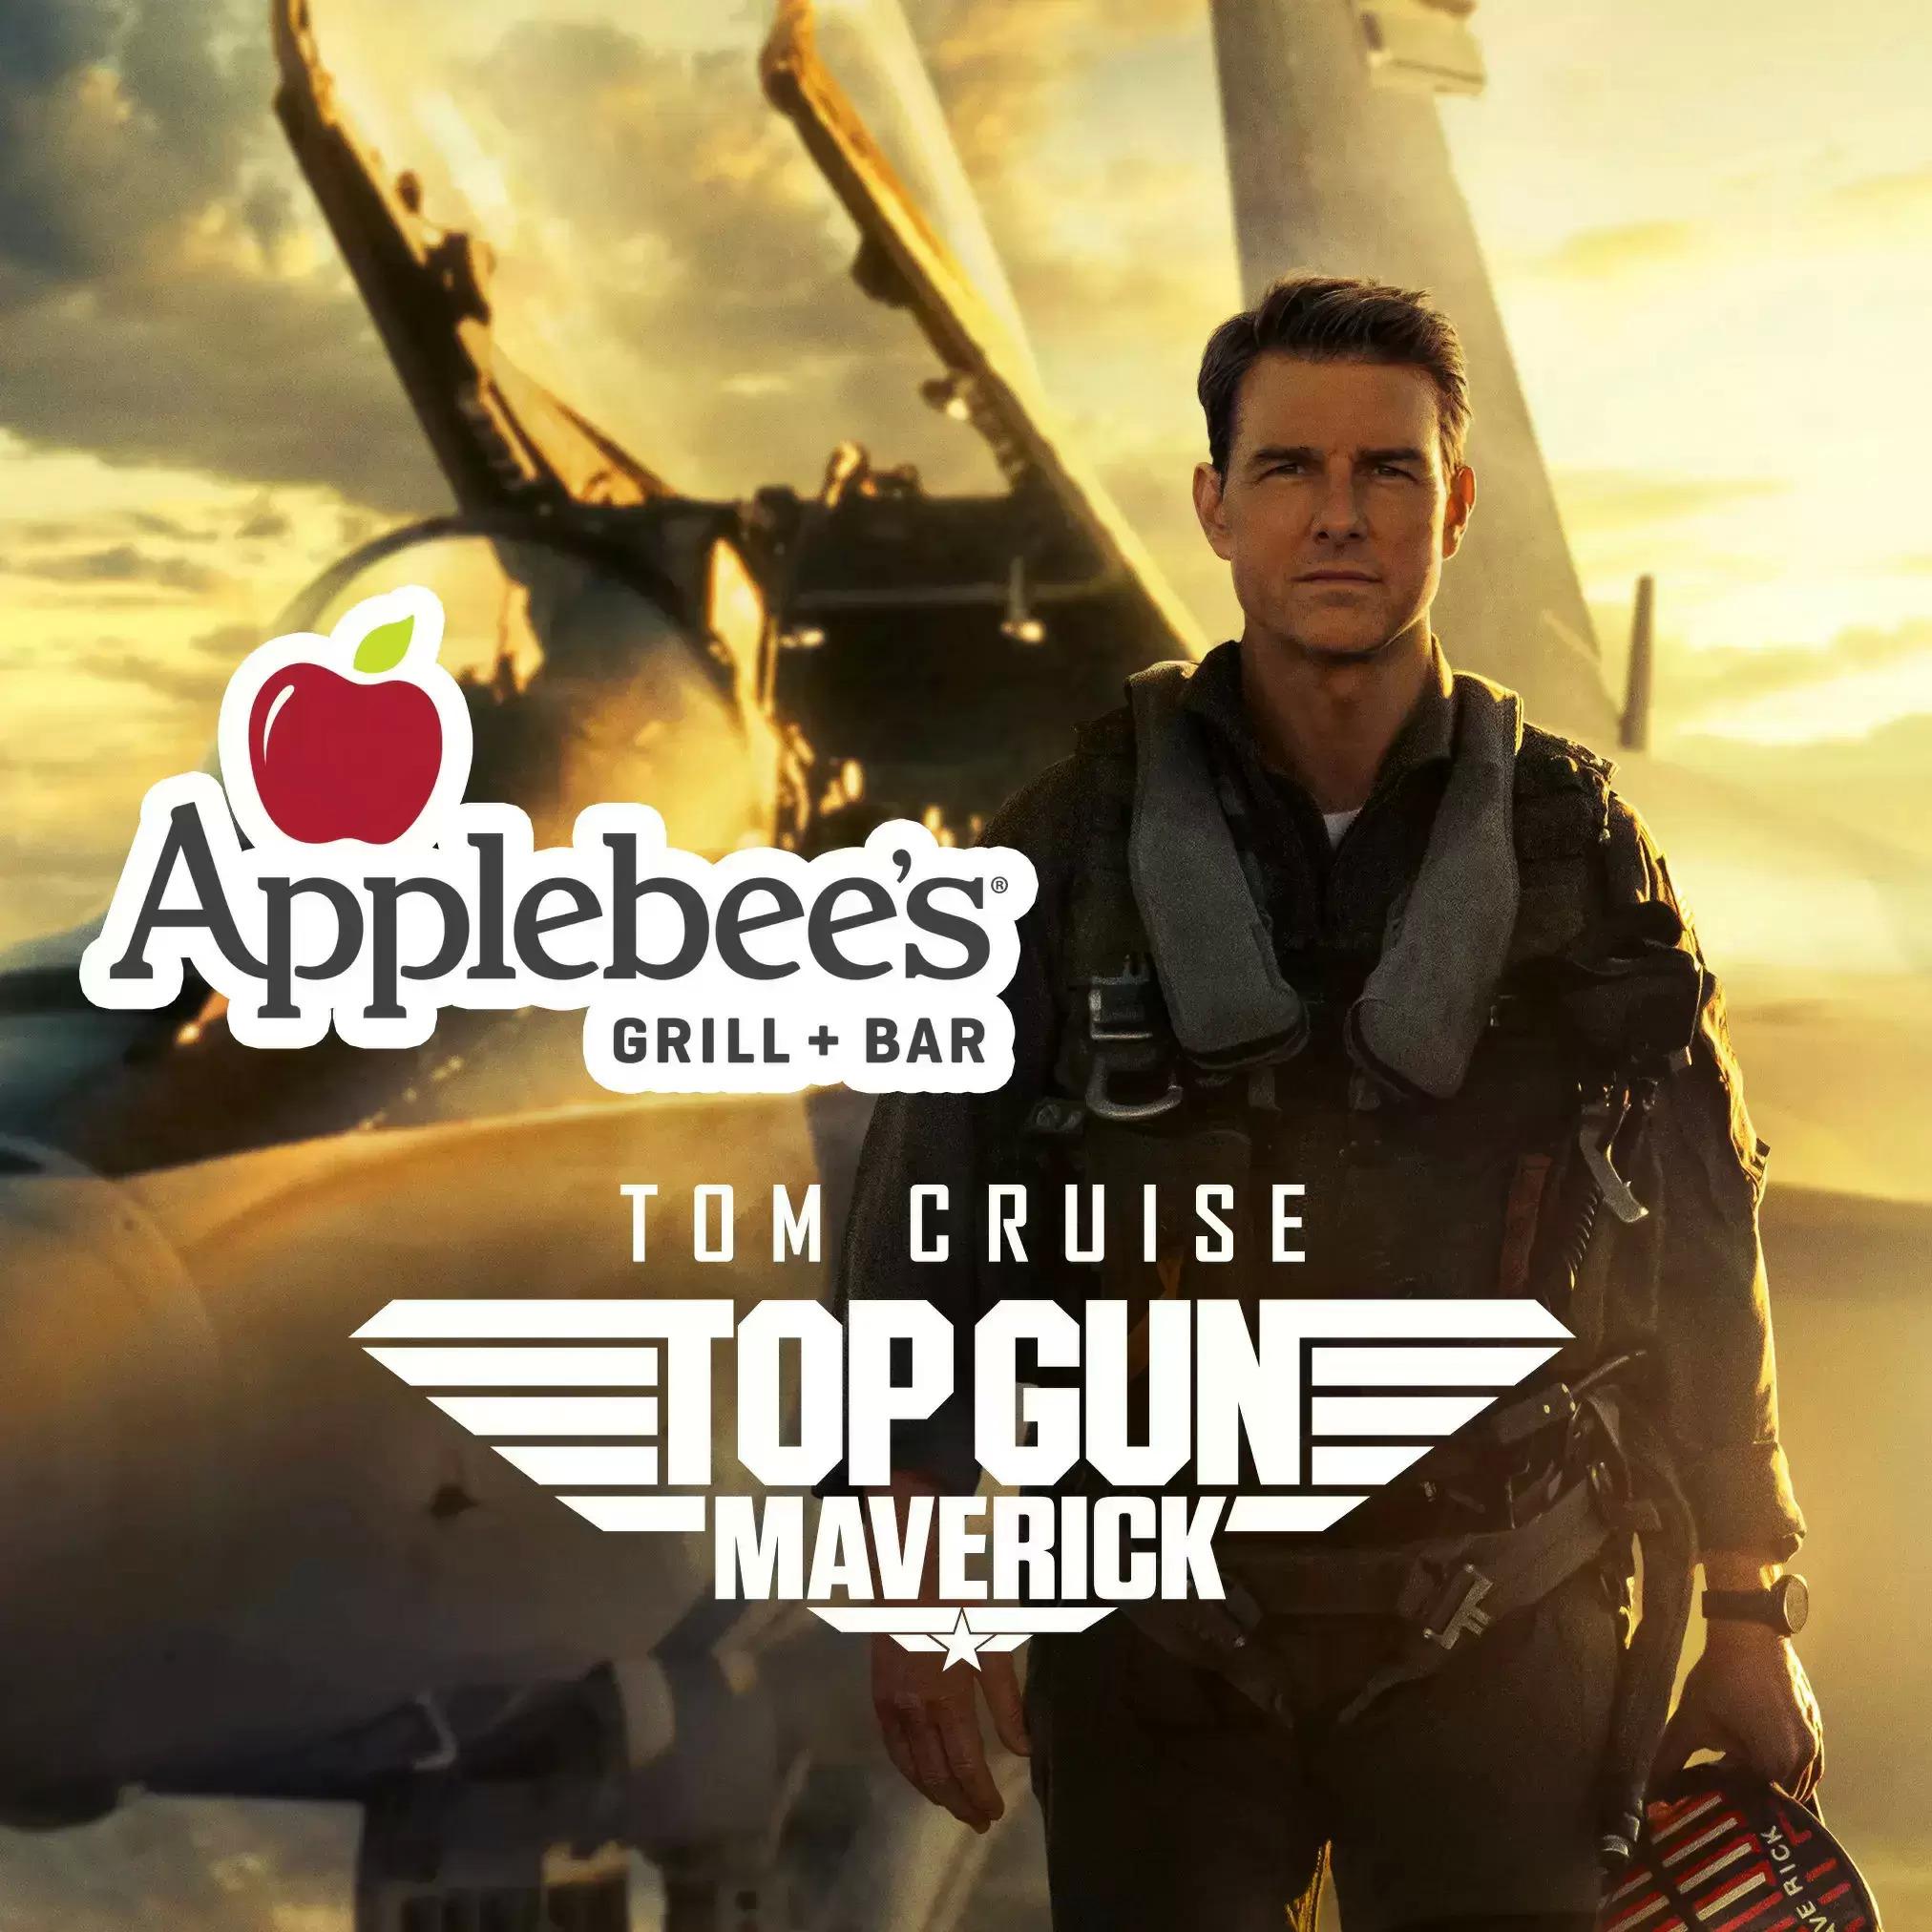 Free Top Gun Maverick Movie Ticket for Eating at Applebees